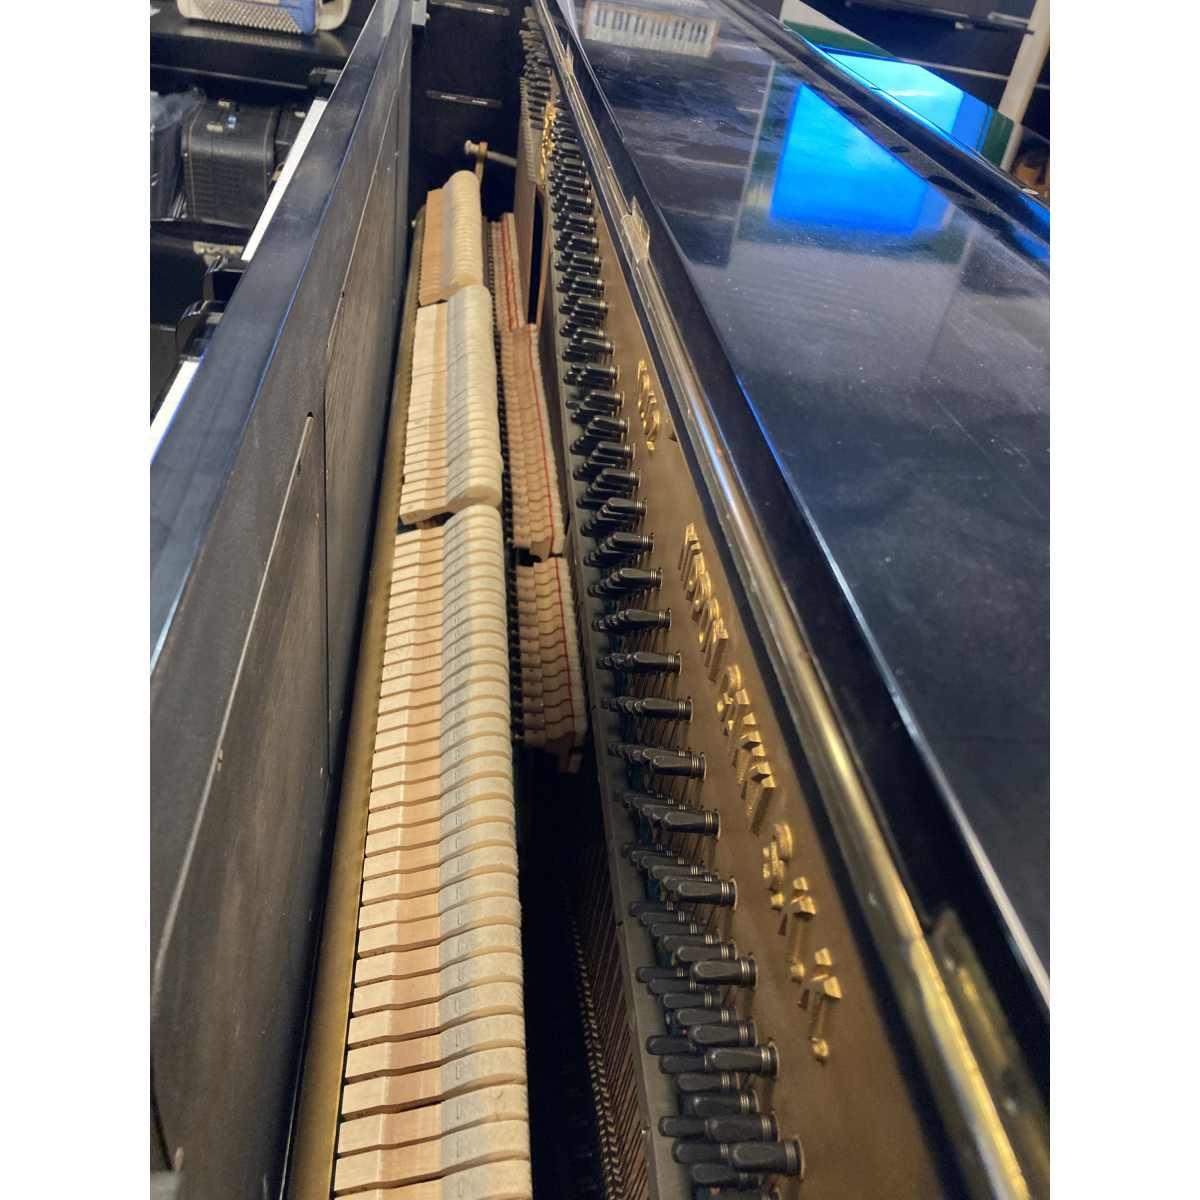 Yamaha u2 pianoforte verticale sn 240507